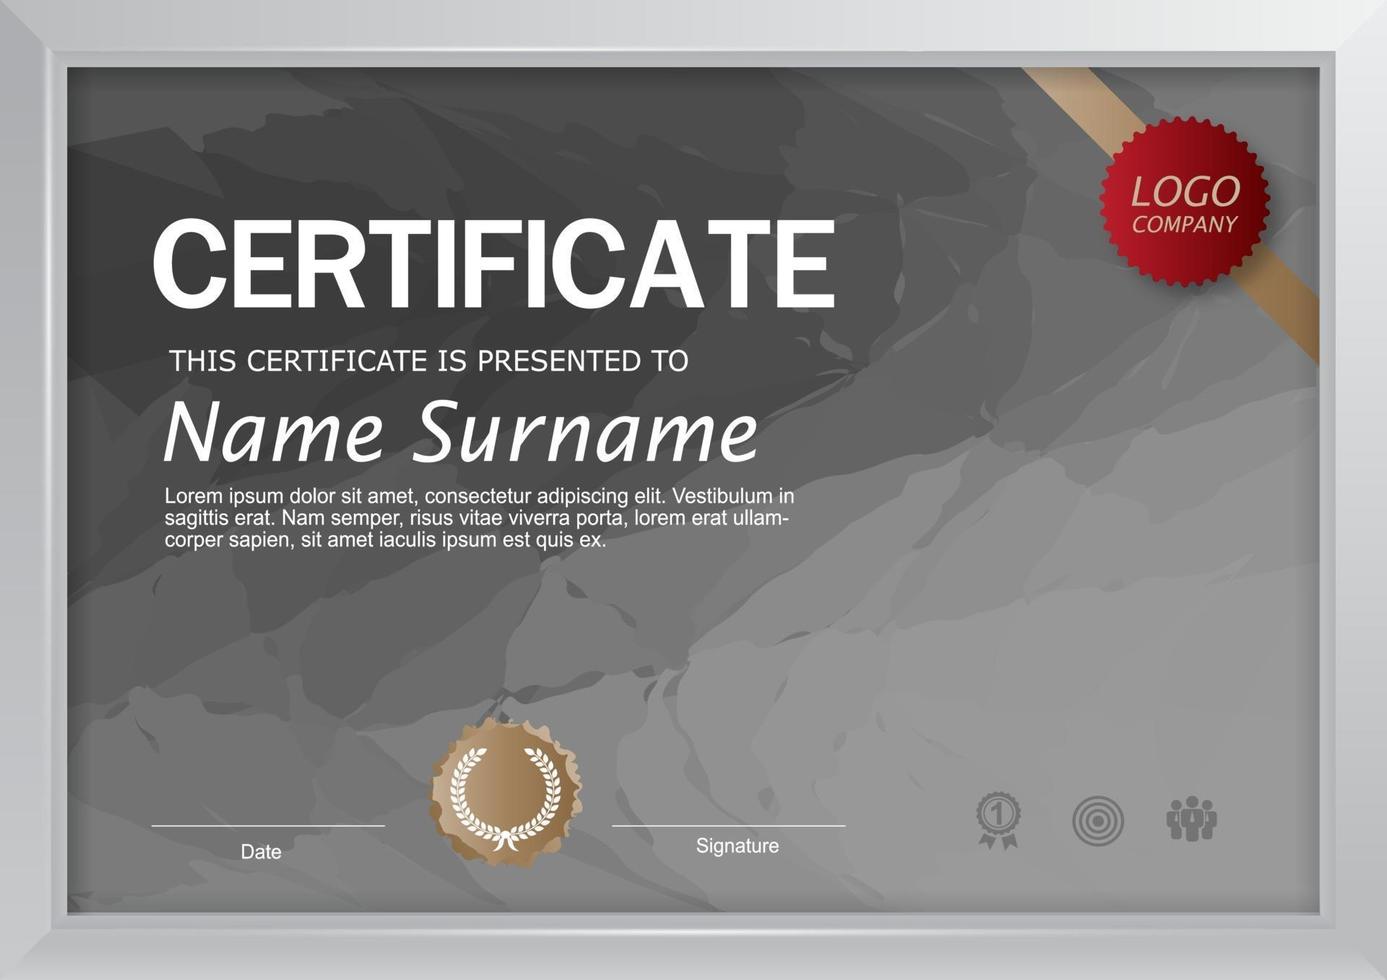 Certificate background design template vector